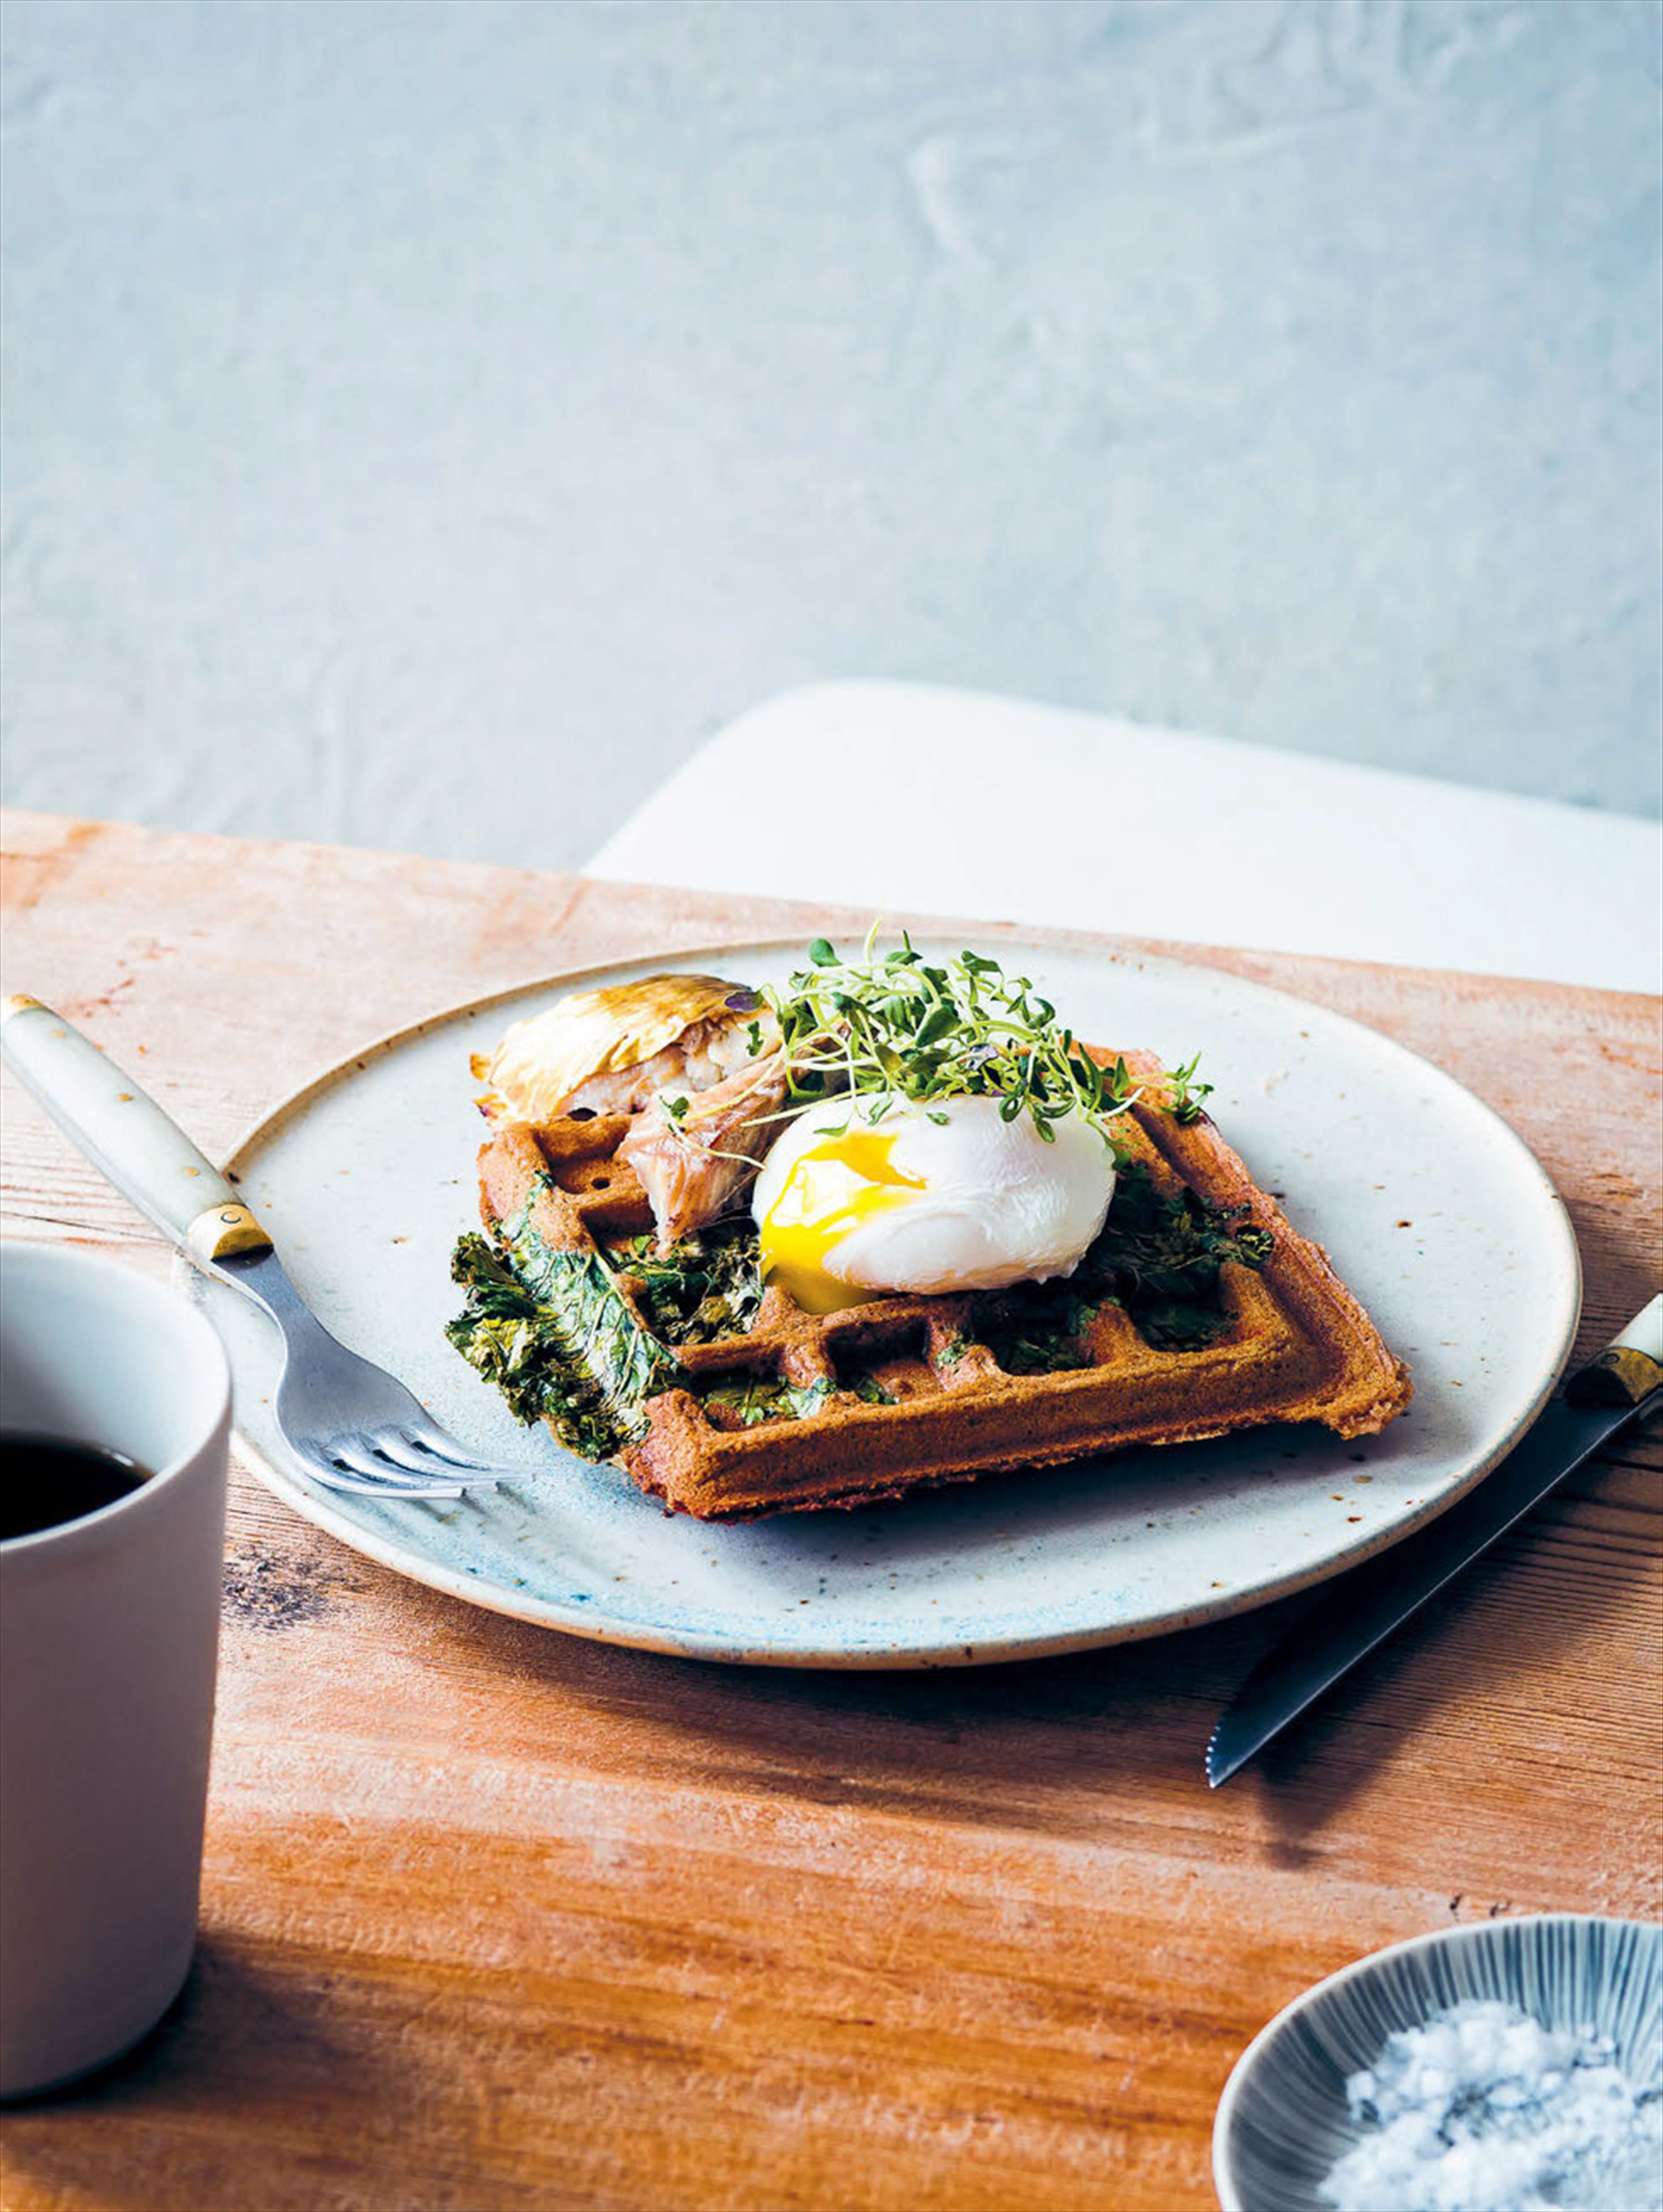 Kale & buckwheat waffles with eggs